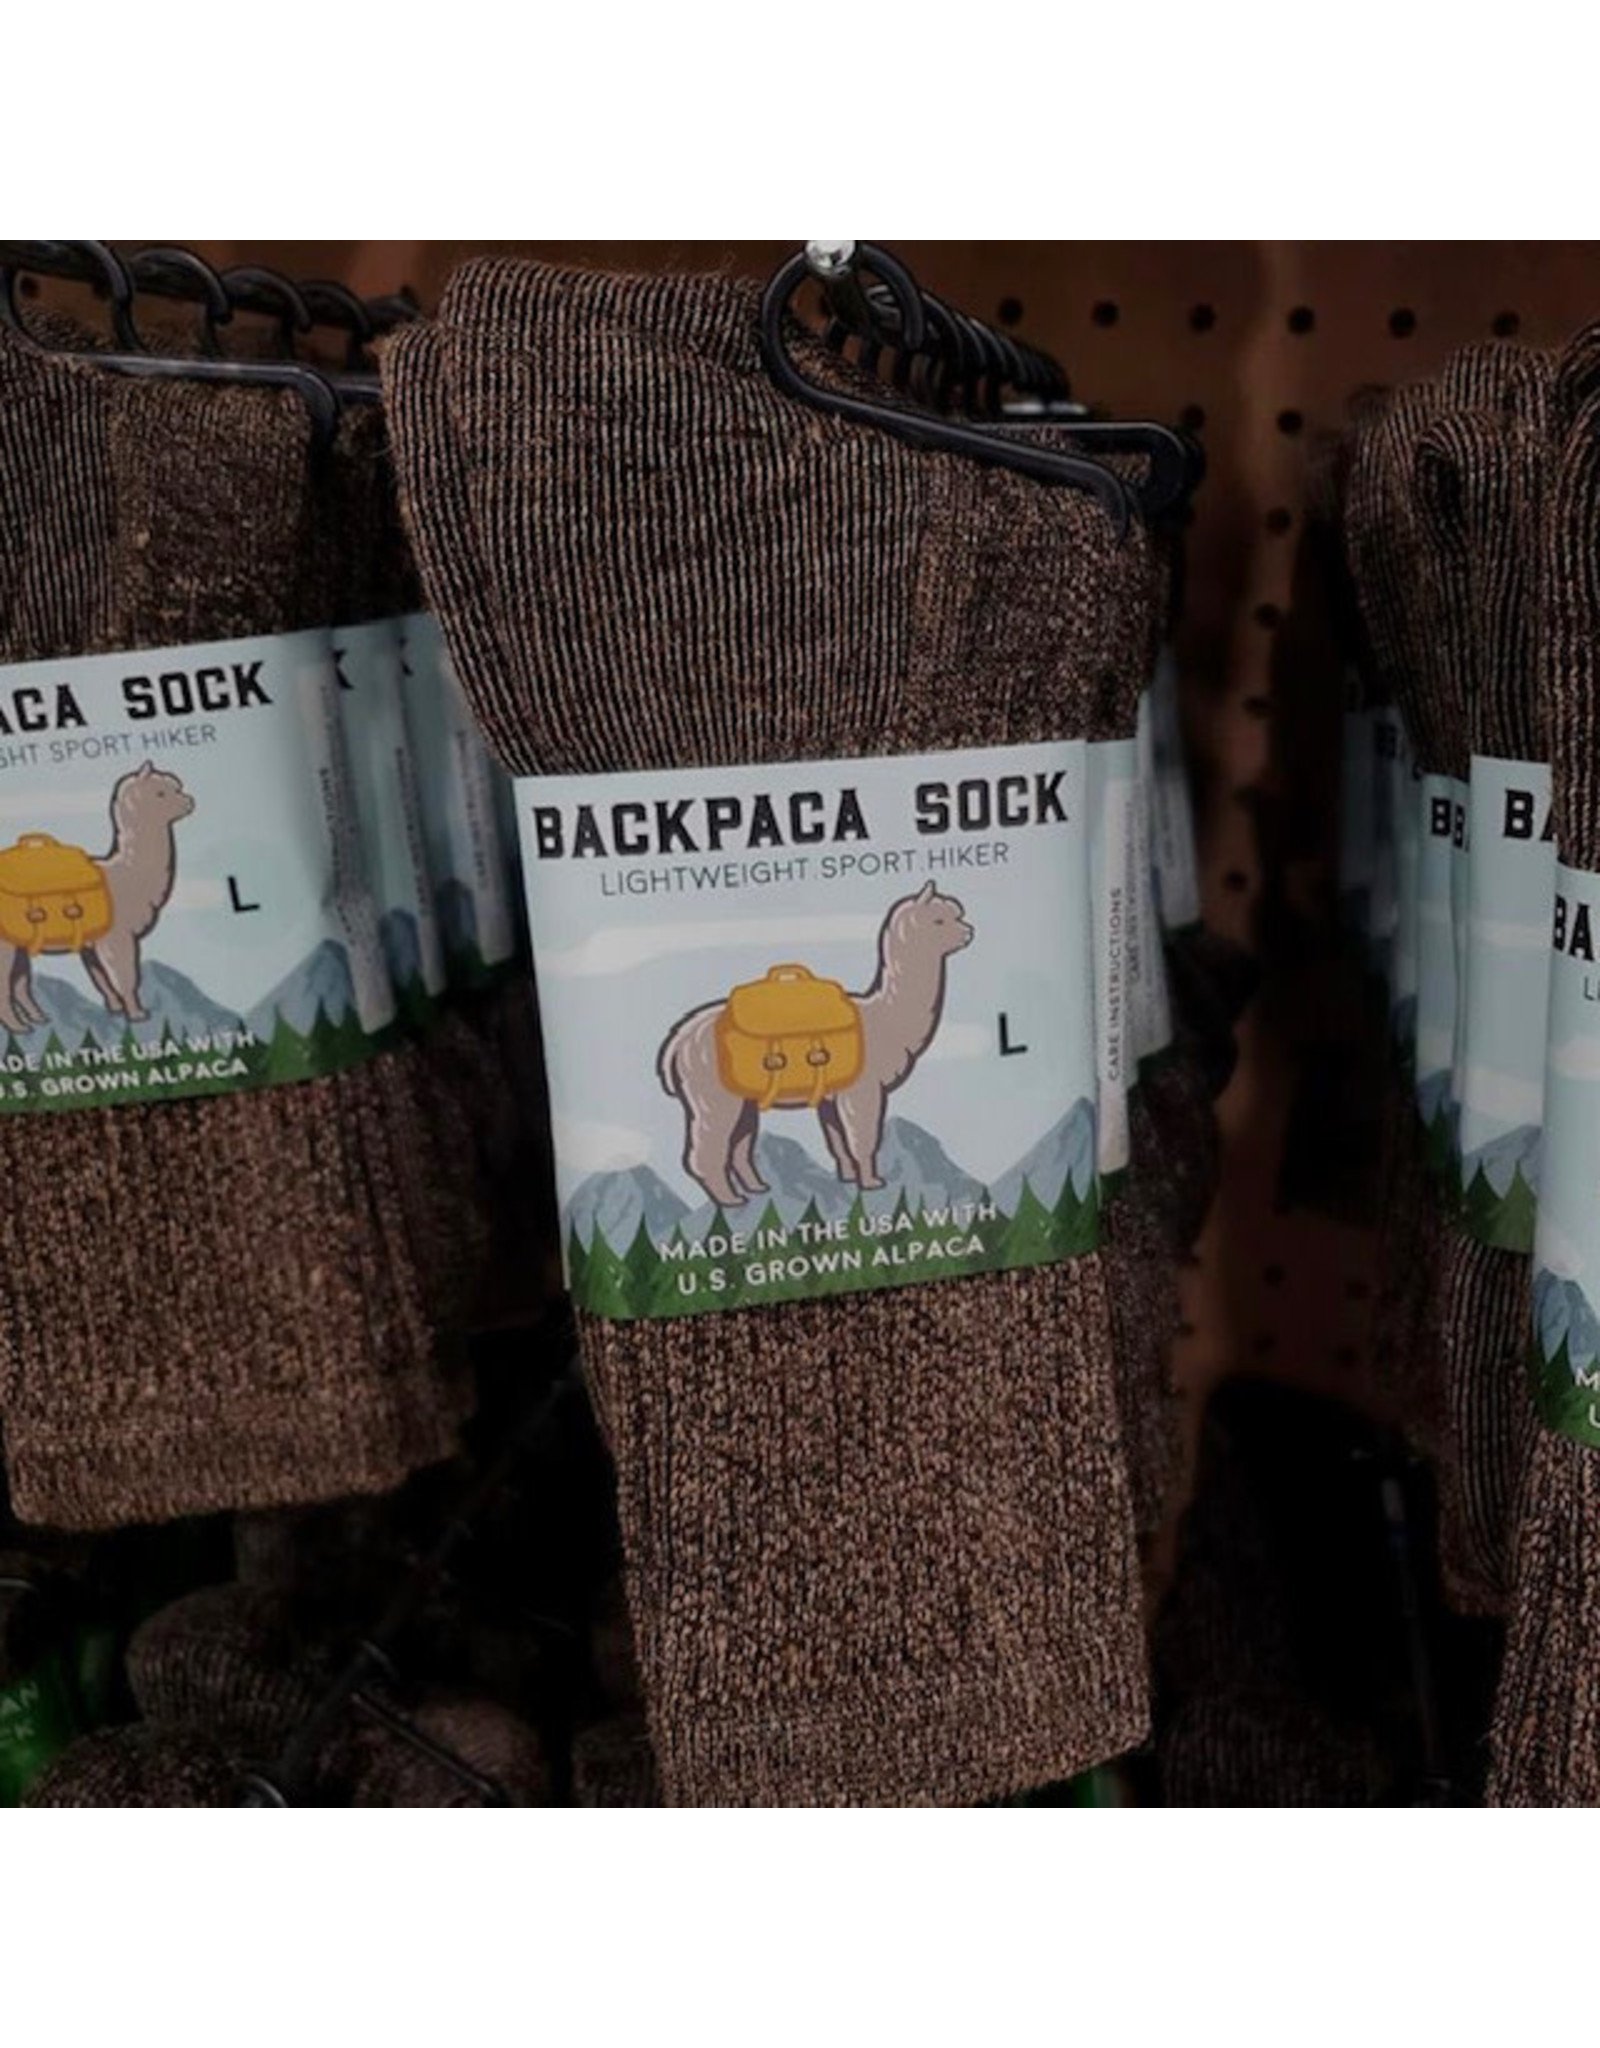 BACKPACA Medium Alpaca Sock- Lightweight  Sport Hiker